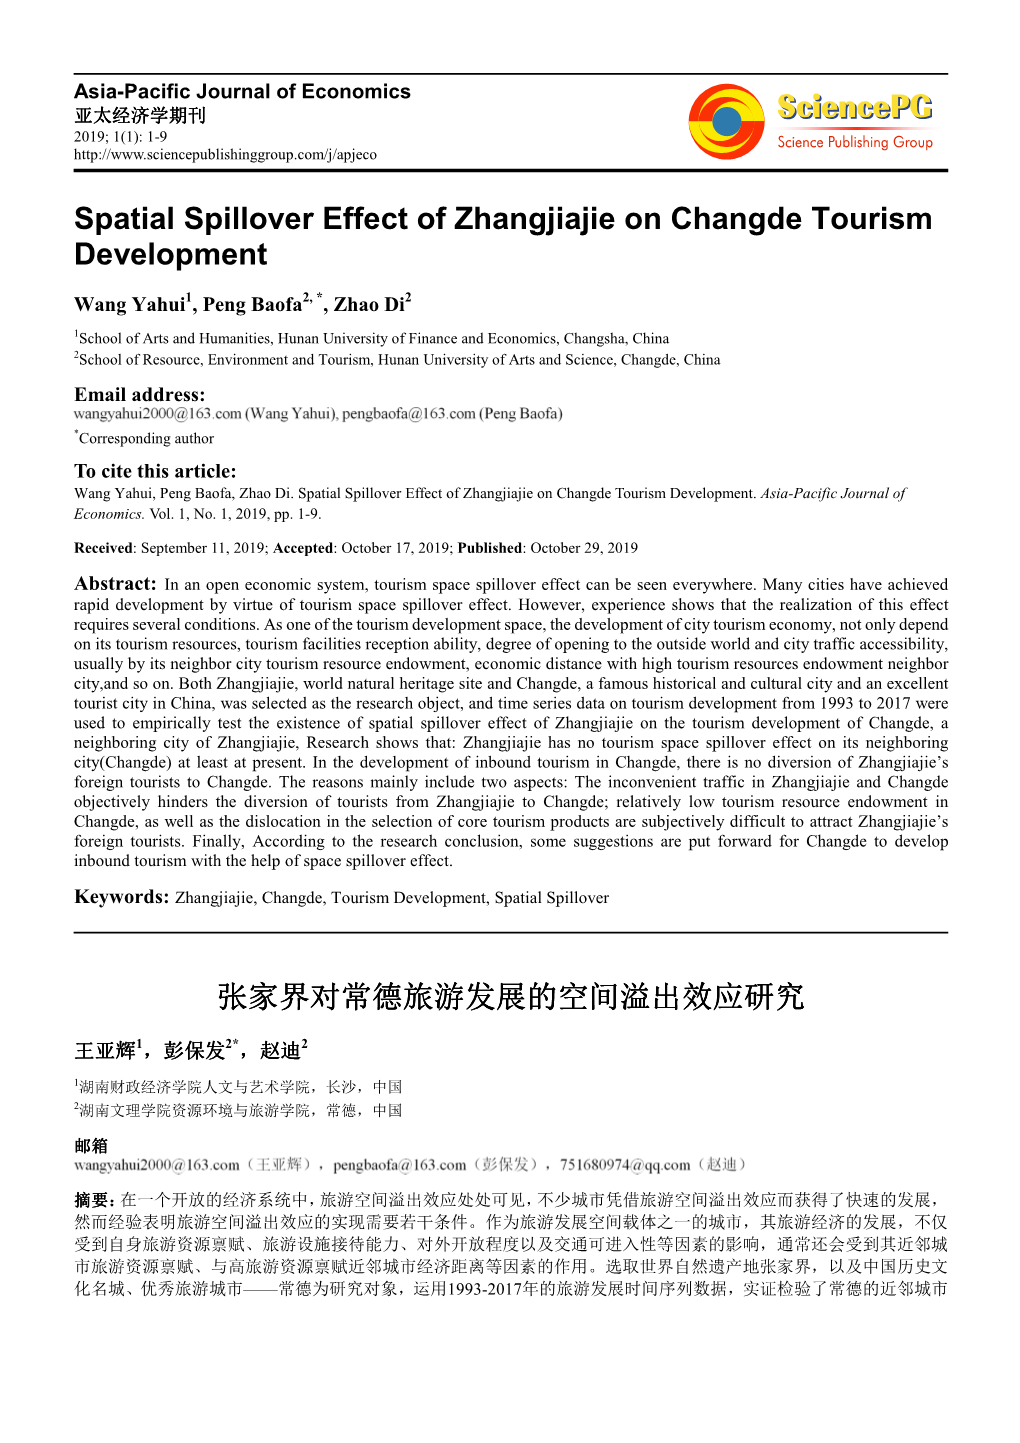 Spatial Spillover Effect of Zhangjiajie on Changde Tourism Development